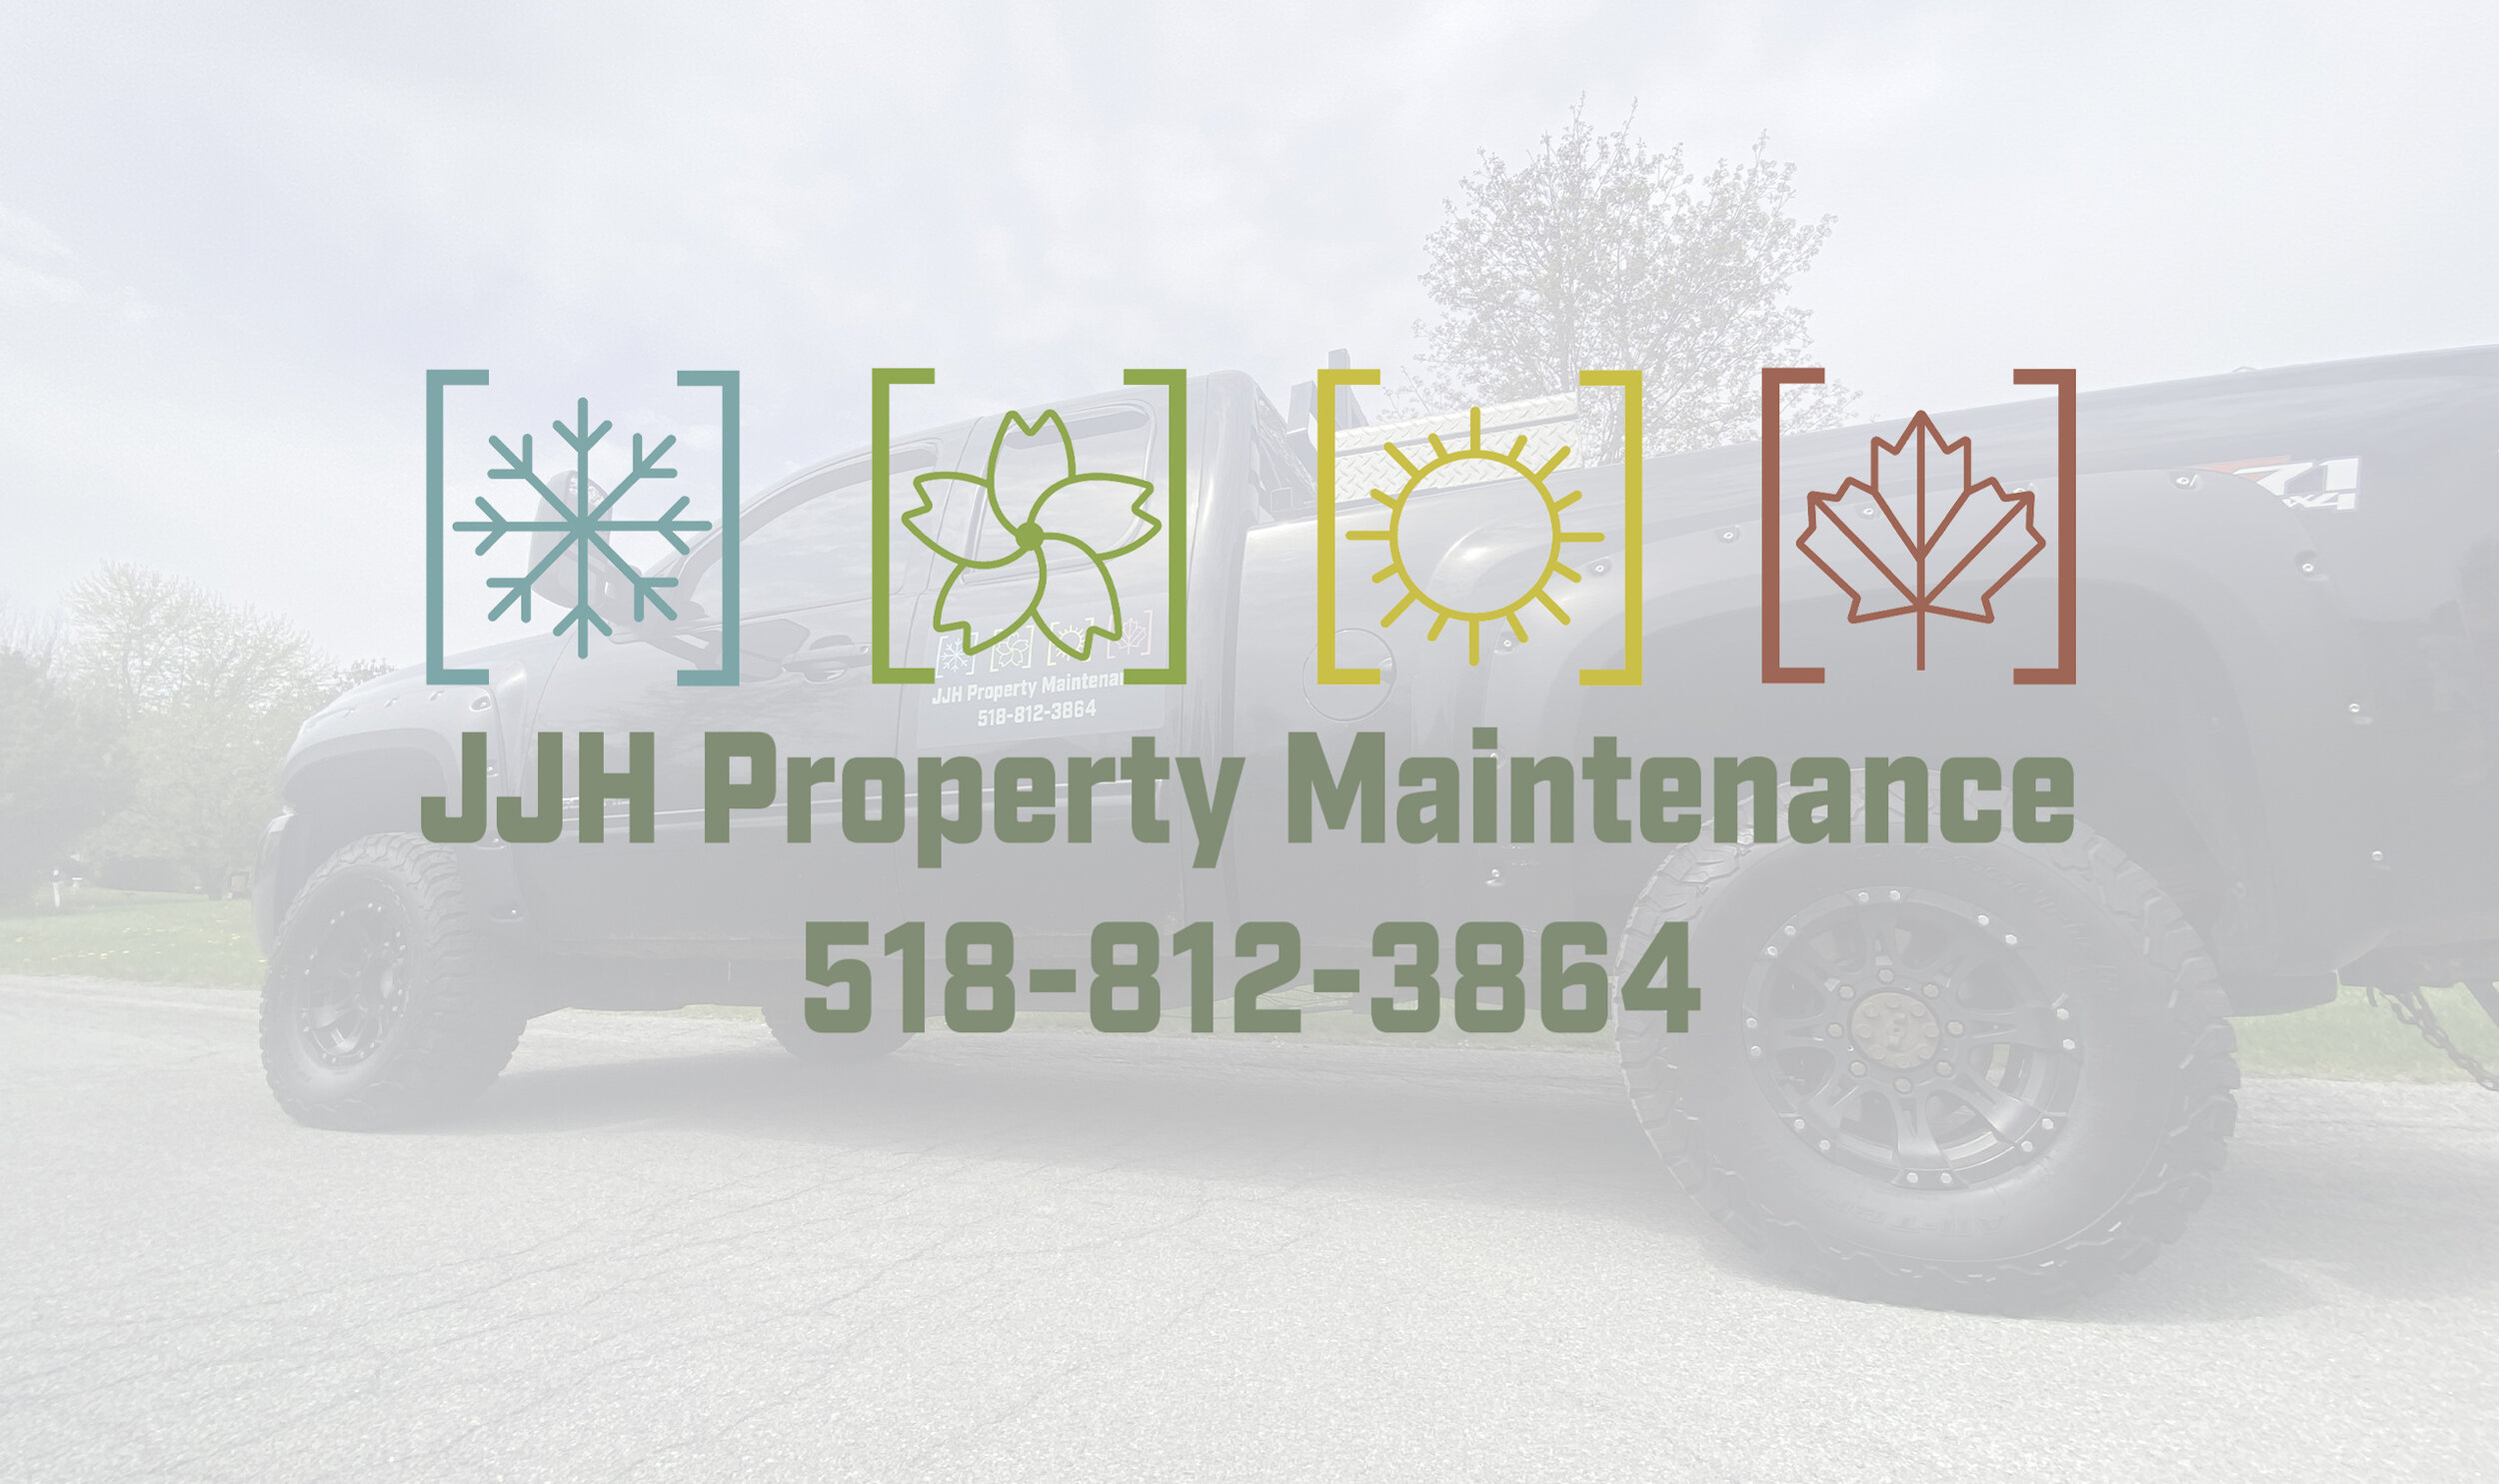 JJH Property Maintenance Logo.jpg